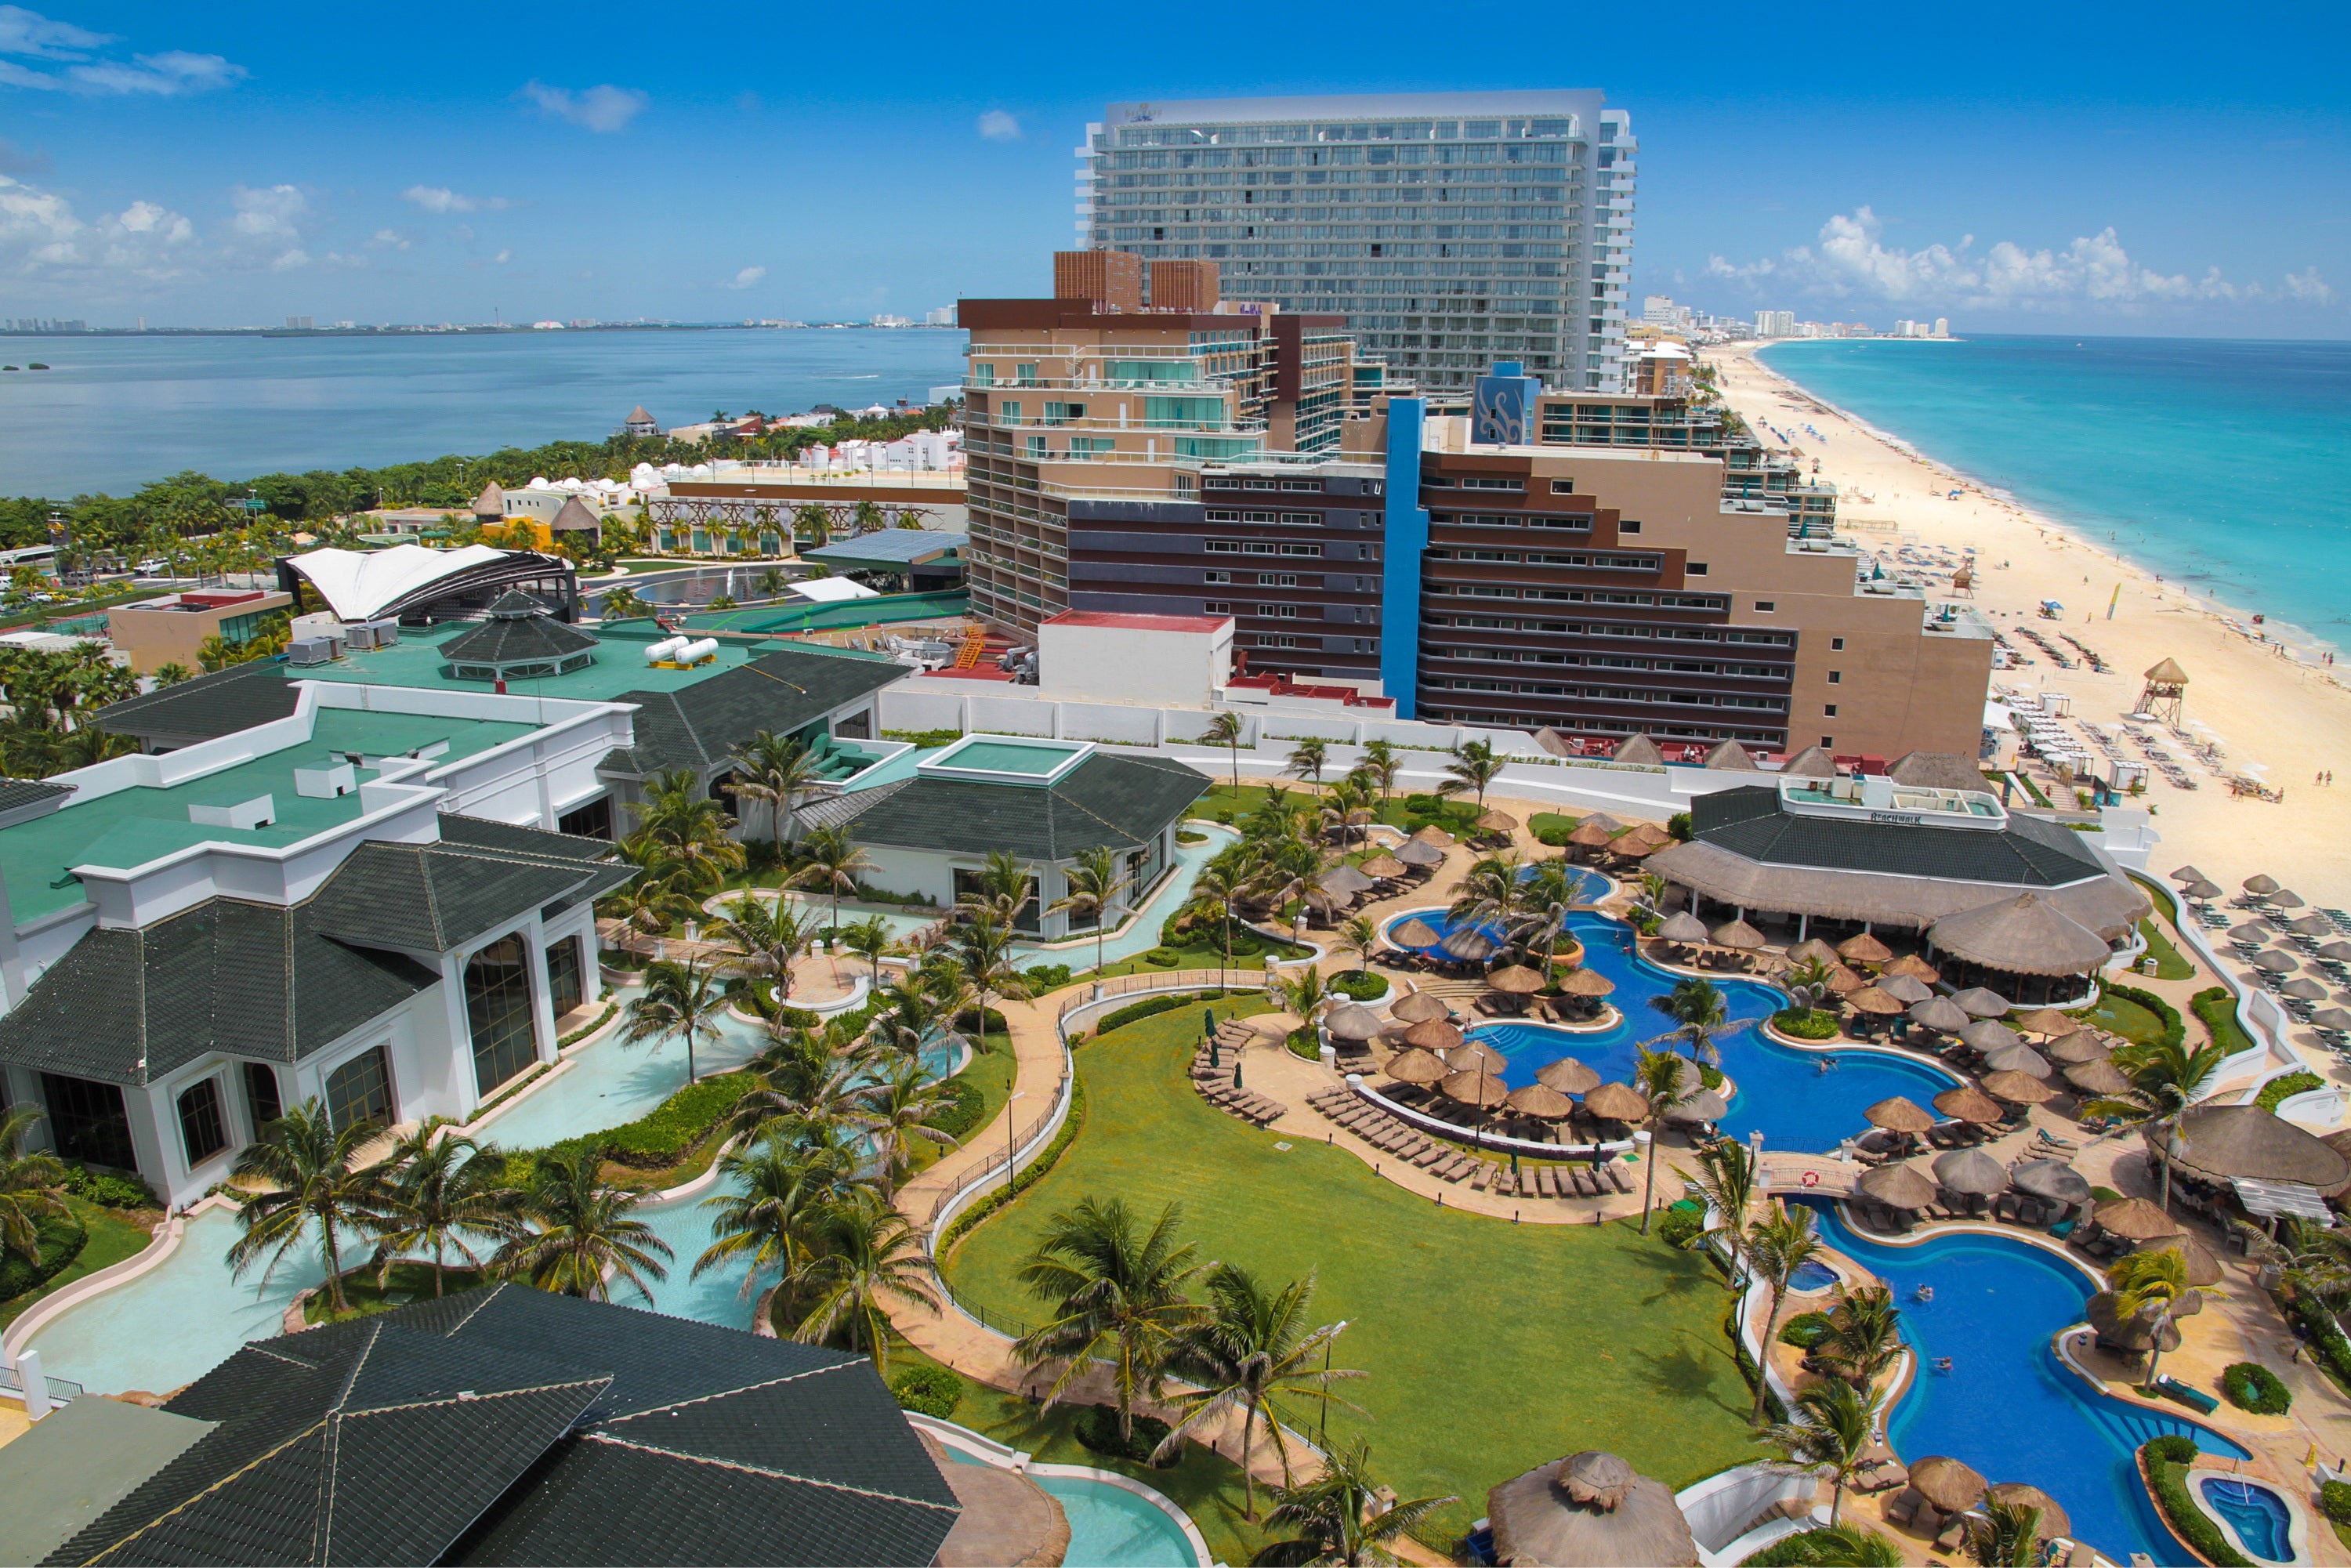 Cancun resorts